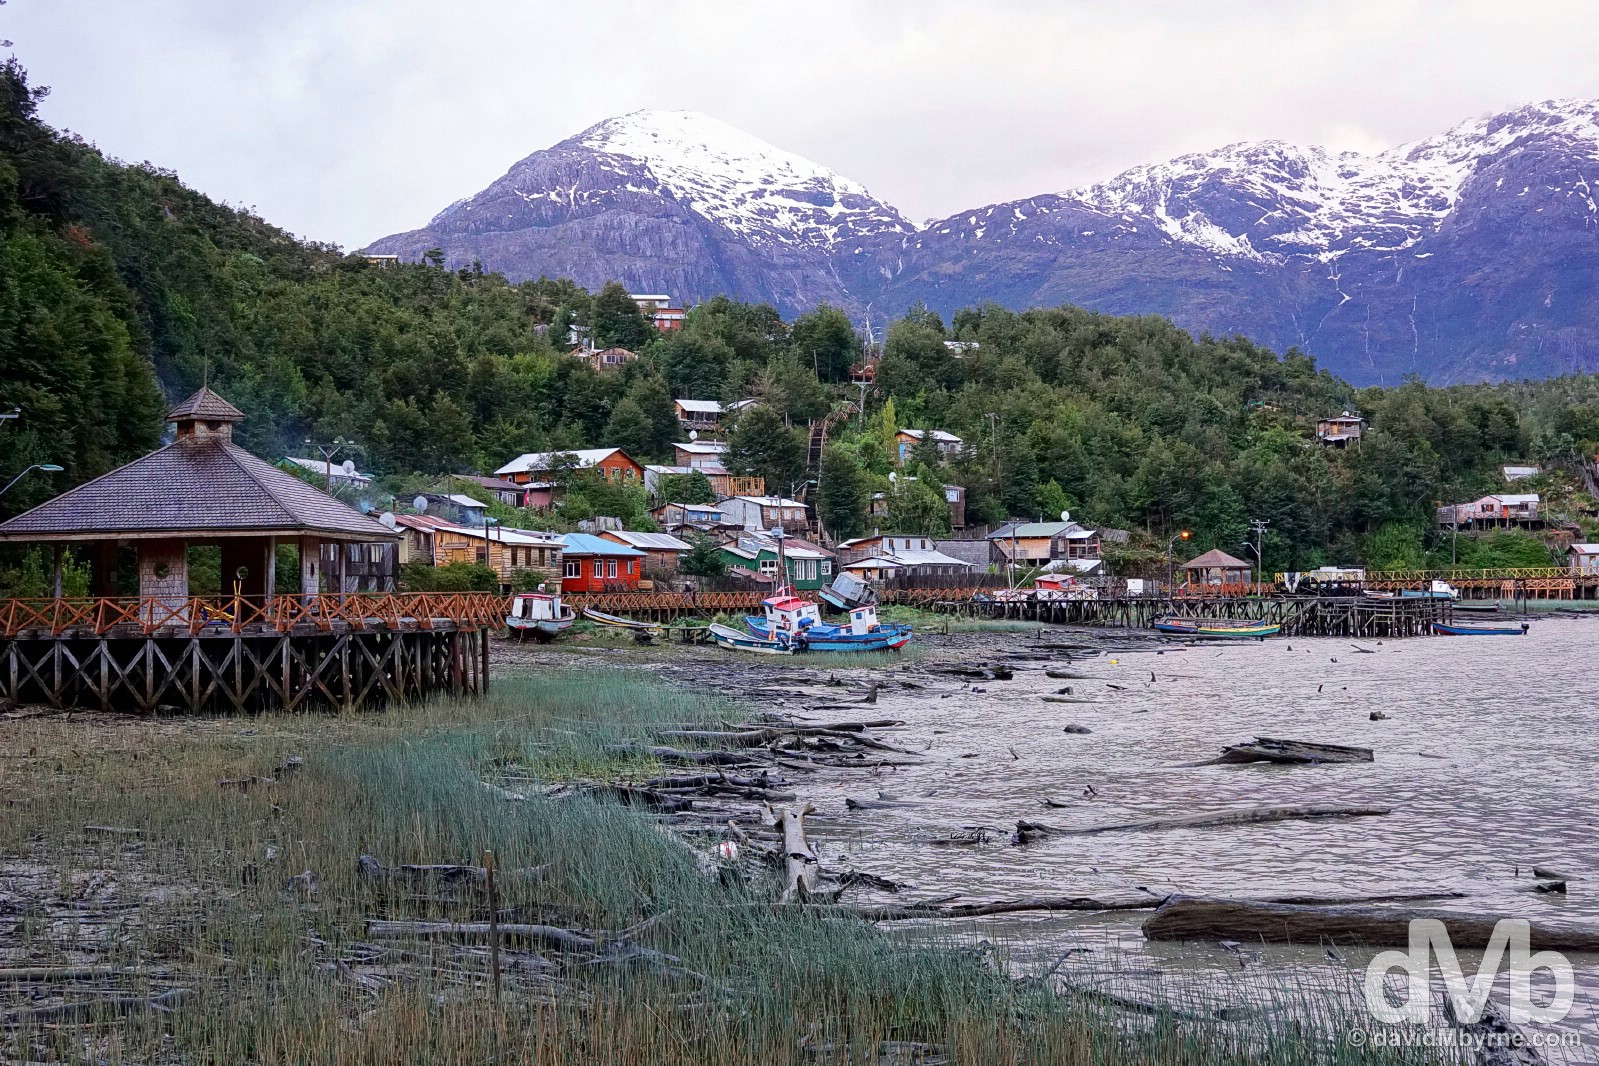 Low tide in Caleta Tortel, Aysen, Chile. October 28, 2015.